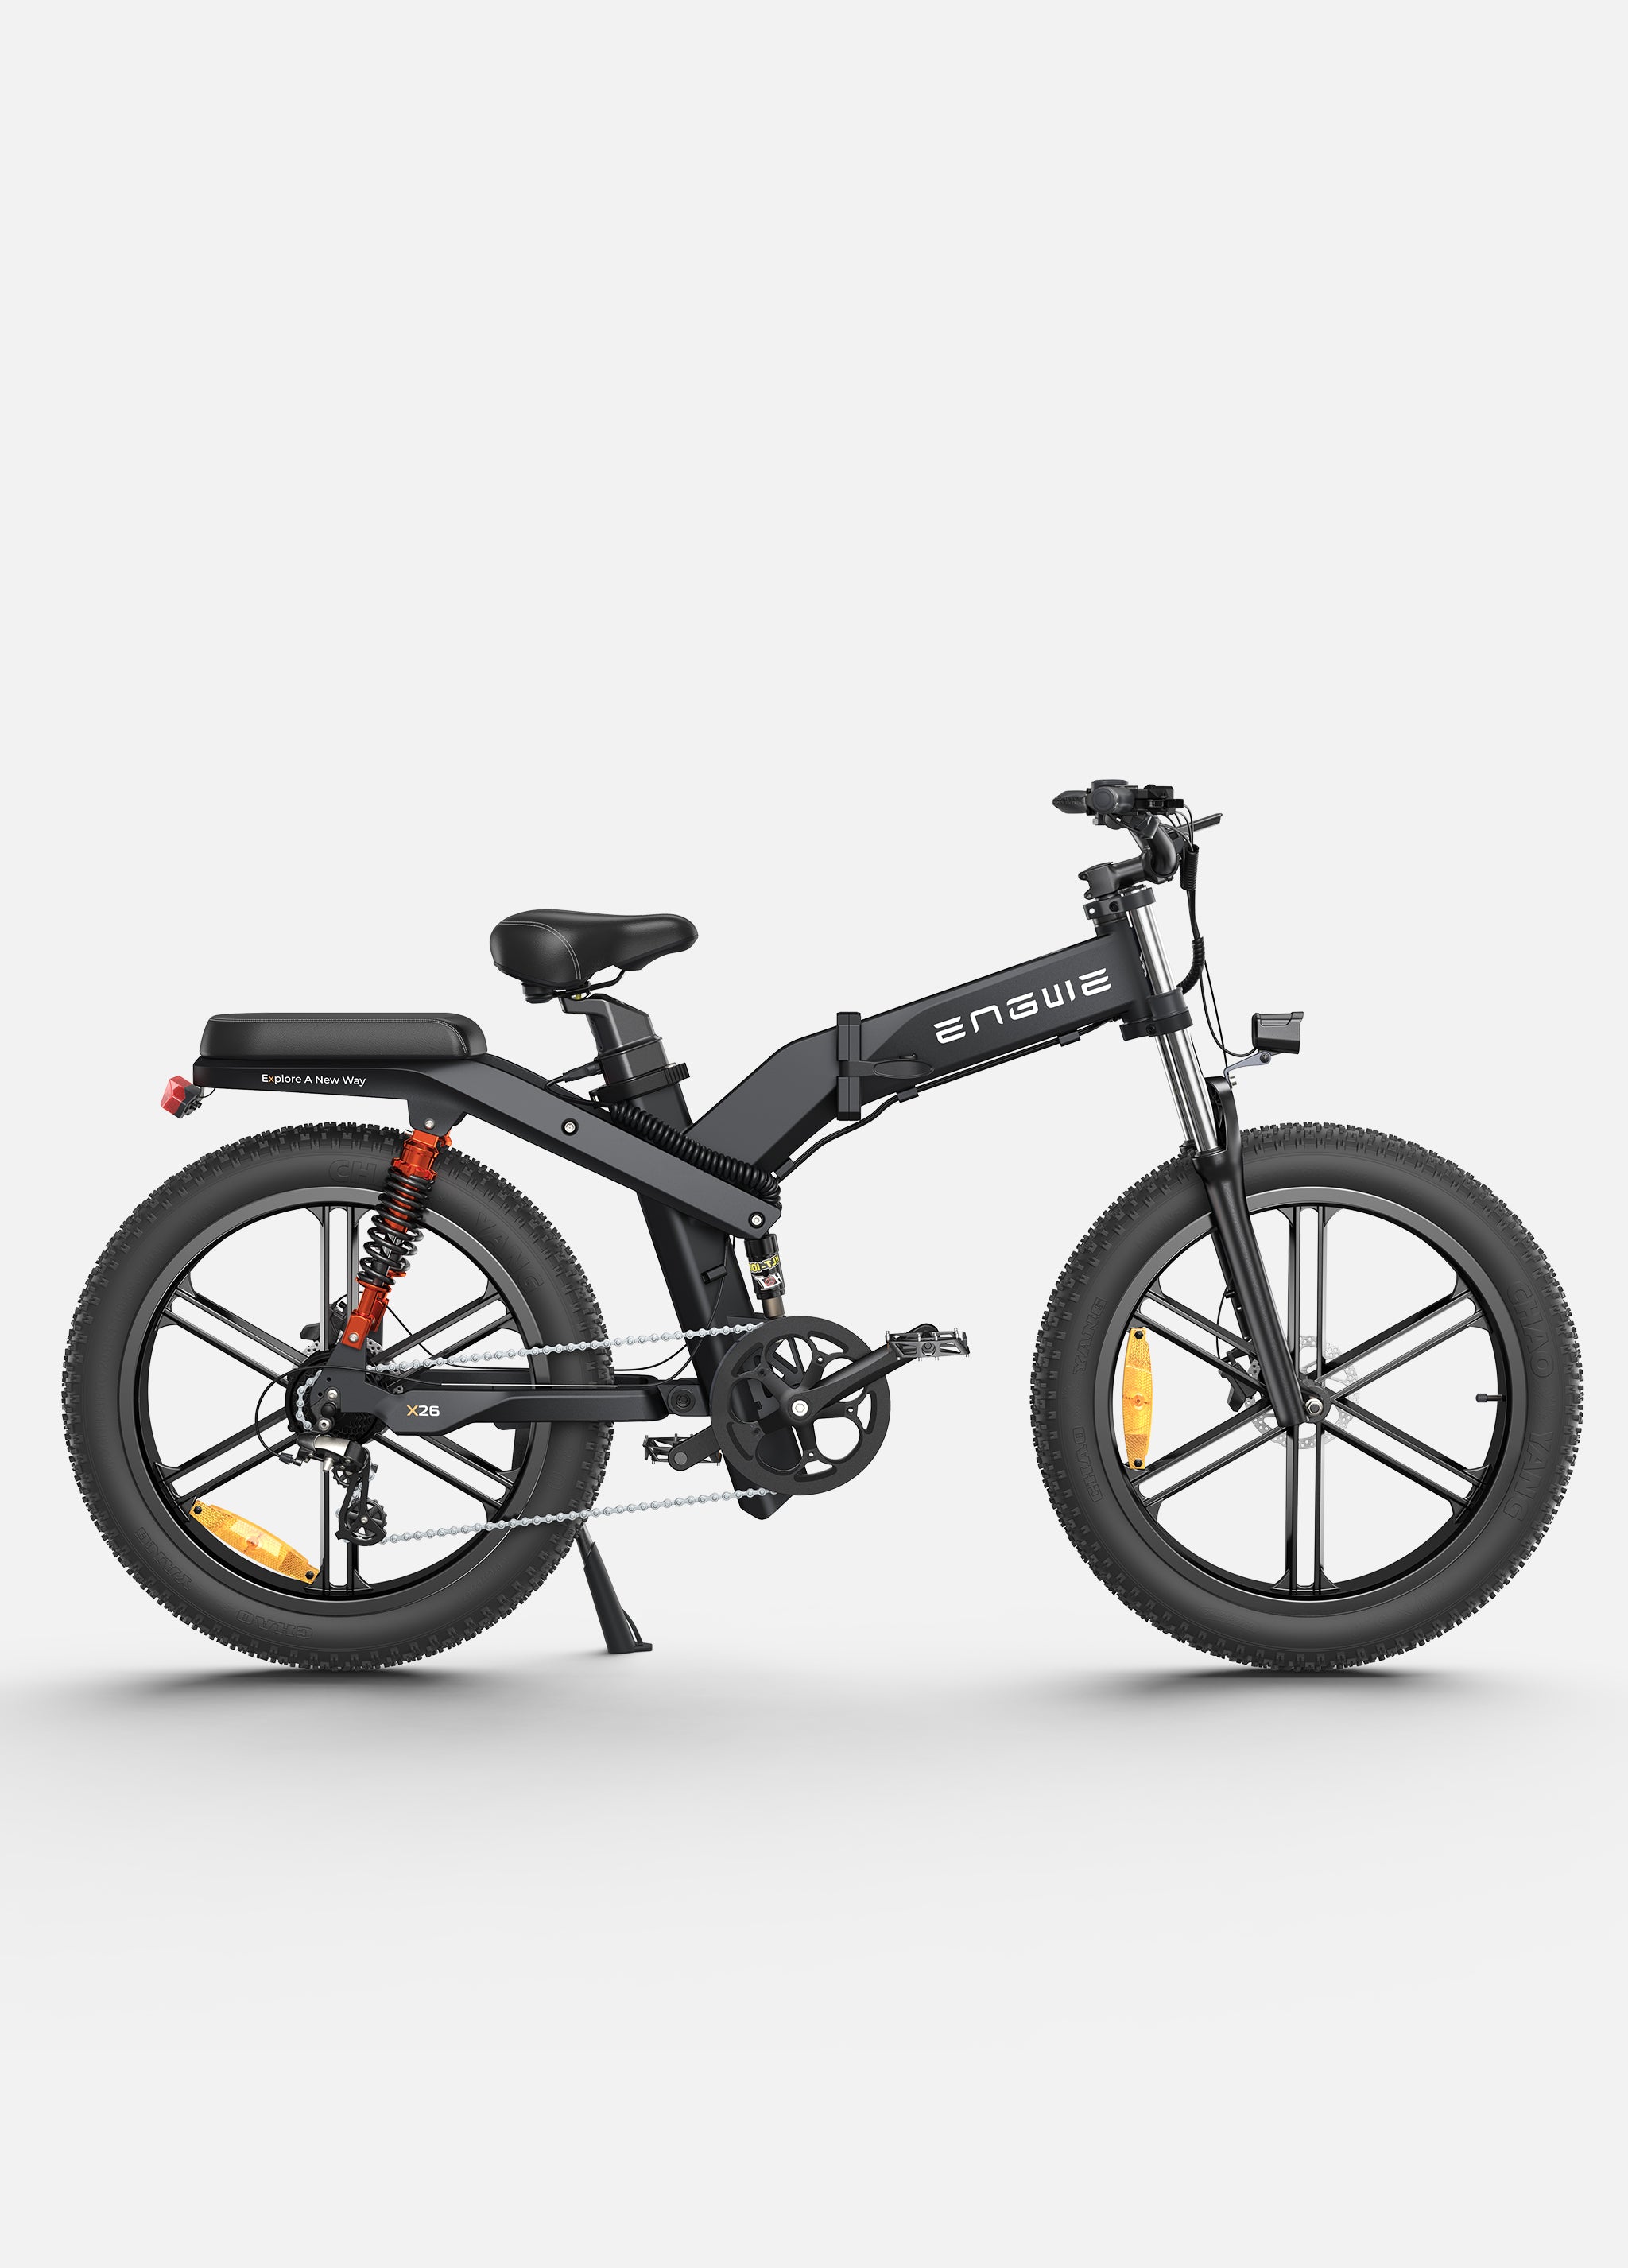 a black engwe x26 foldable full suspension electric mountain bike 